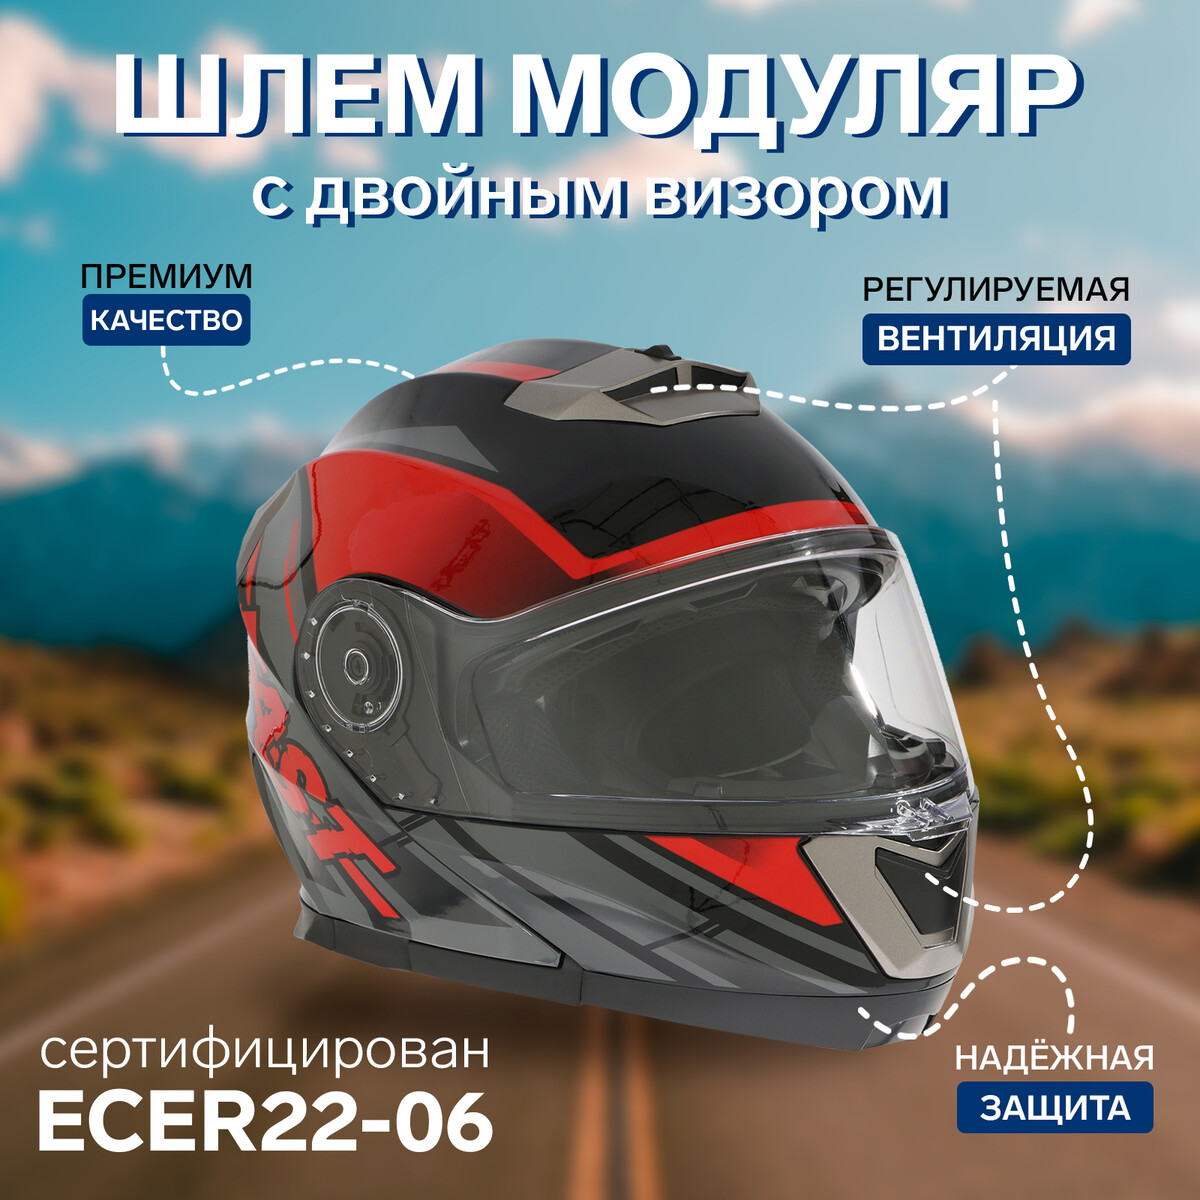 Шлем модуляр с двумя визорами, размер xl (60-61), модель - bld-160e, черно-красный